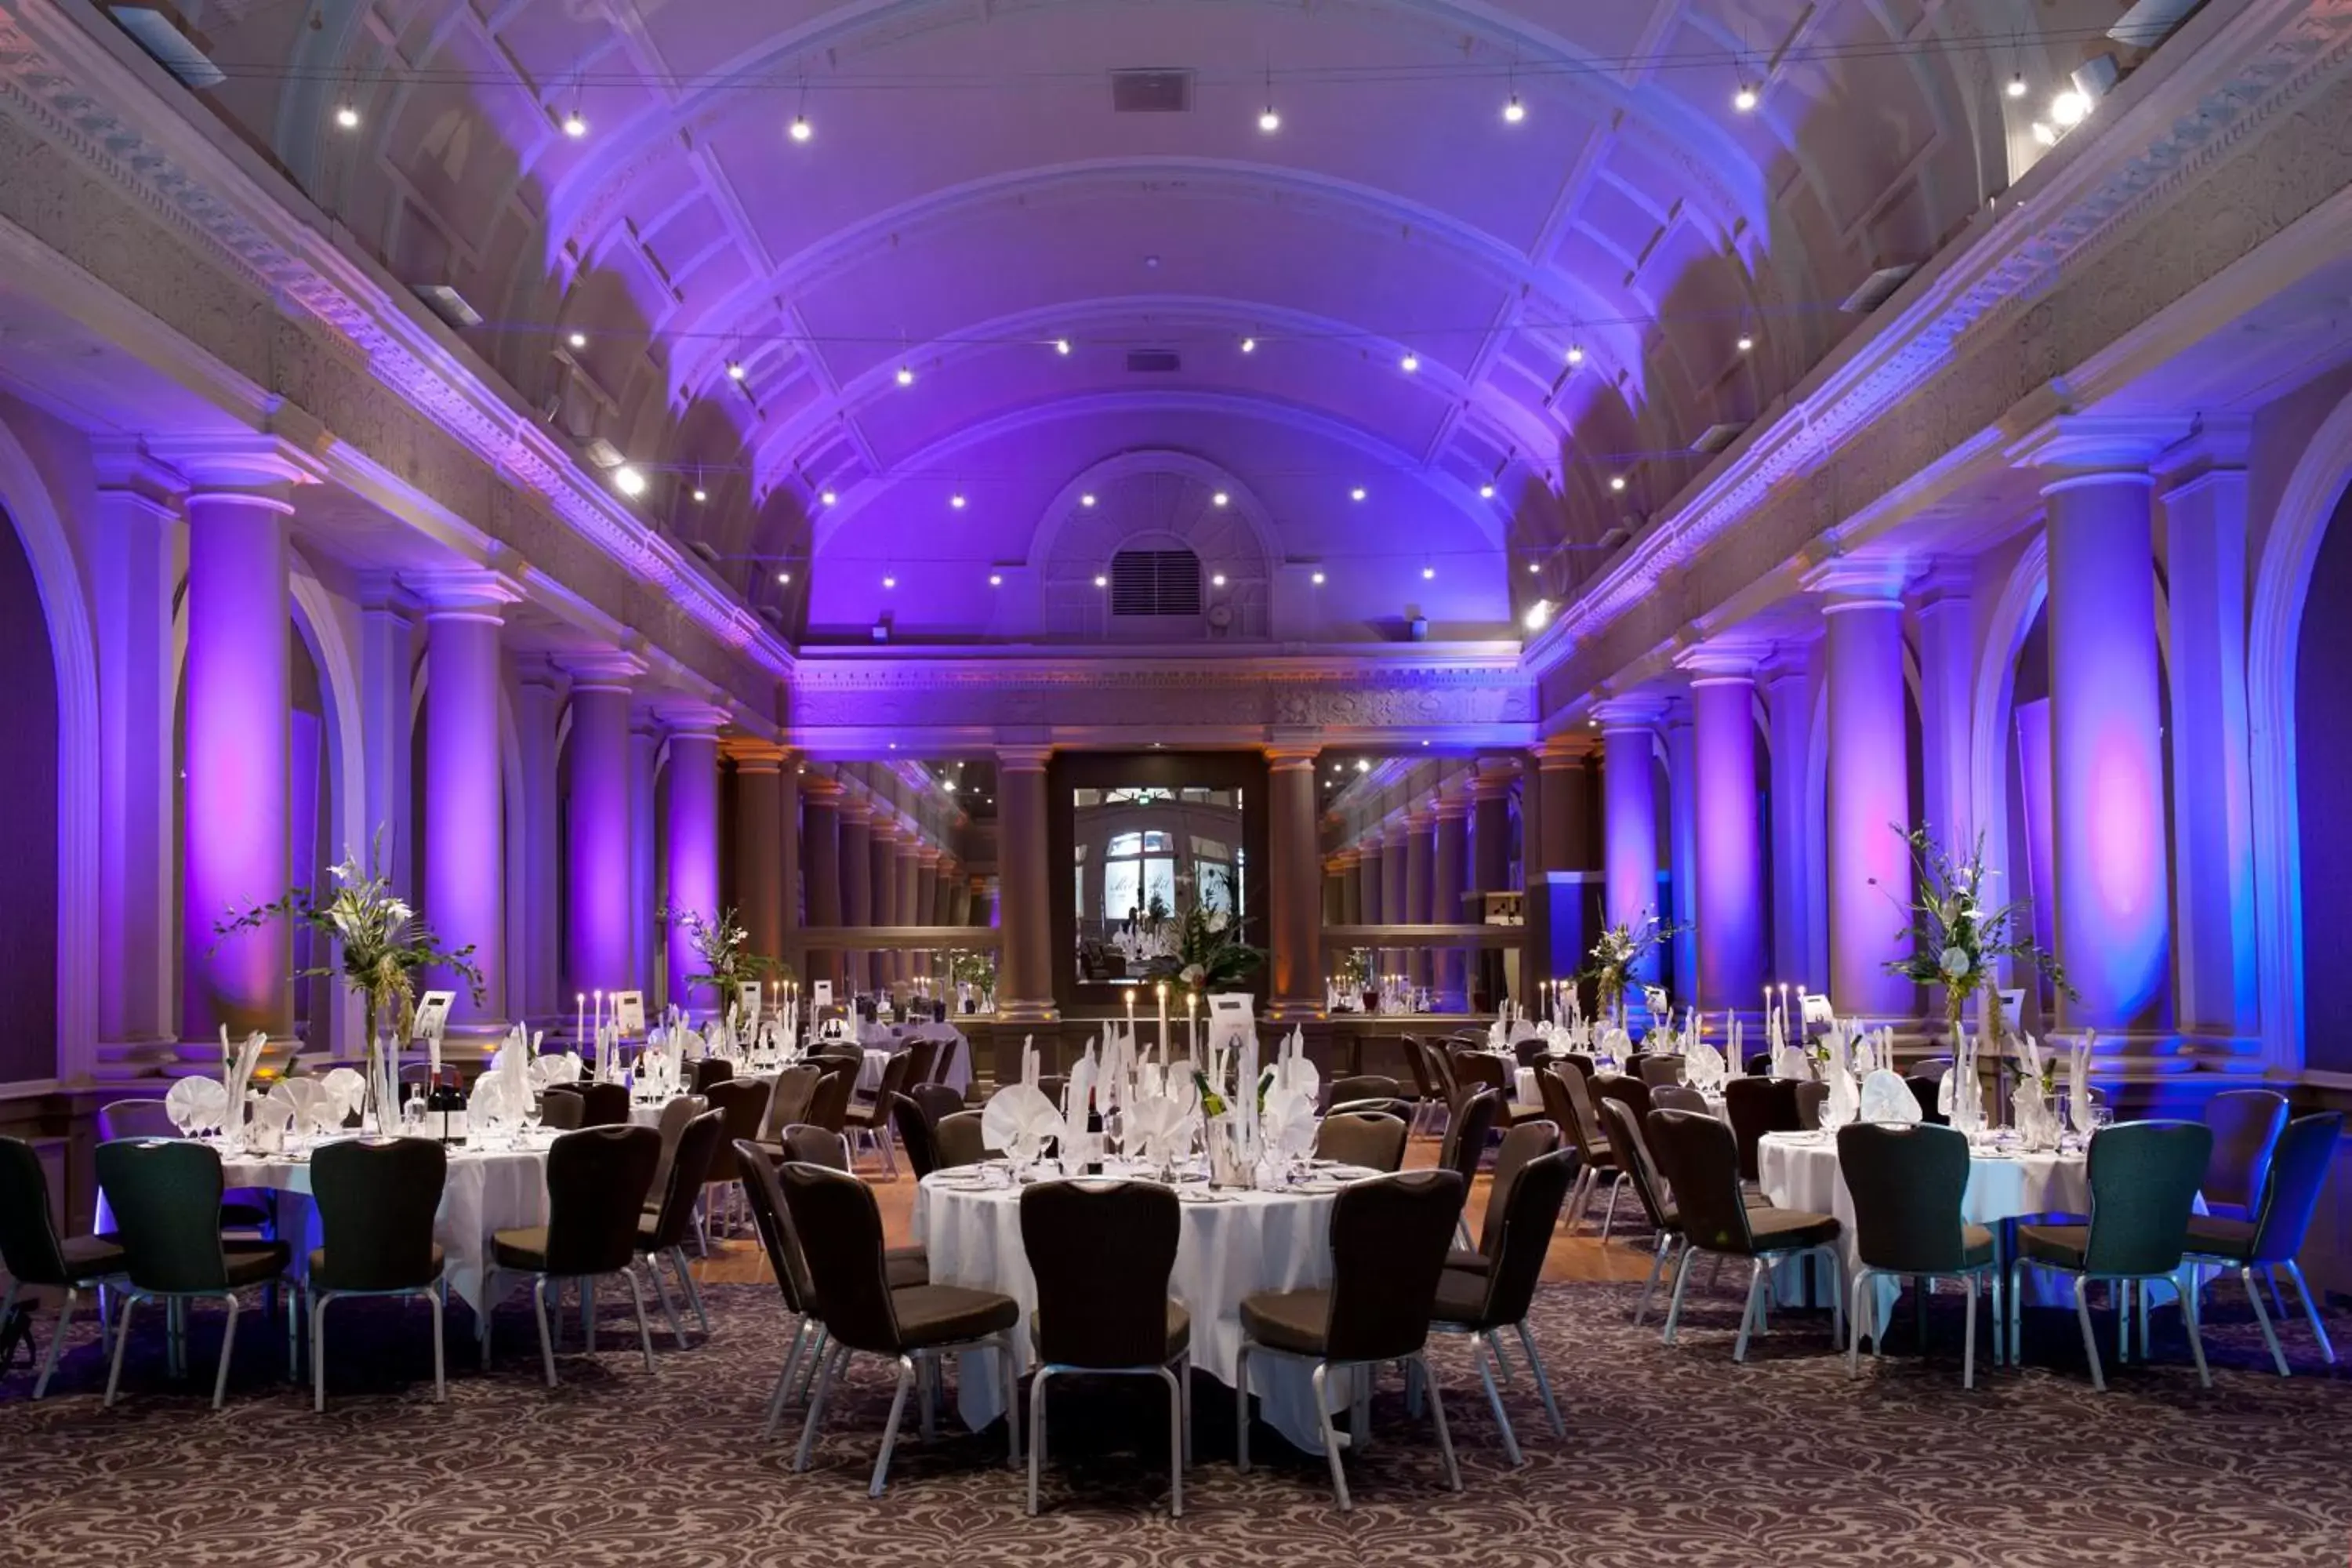 Meeting/conference room, Banquet Facilities in The Met Hotel Leeds